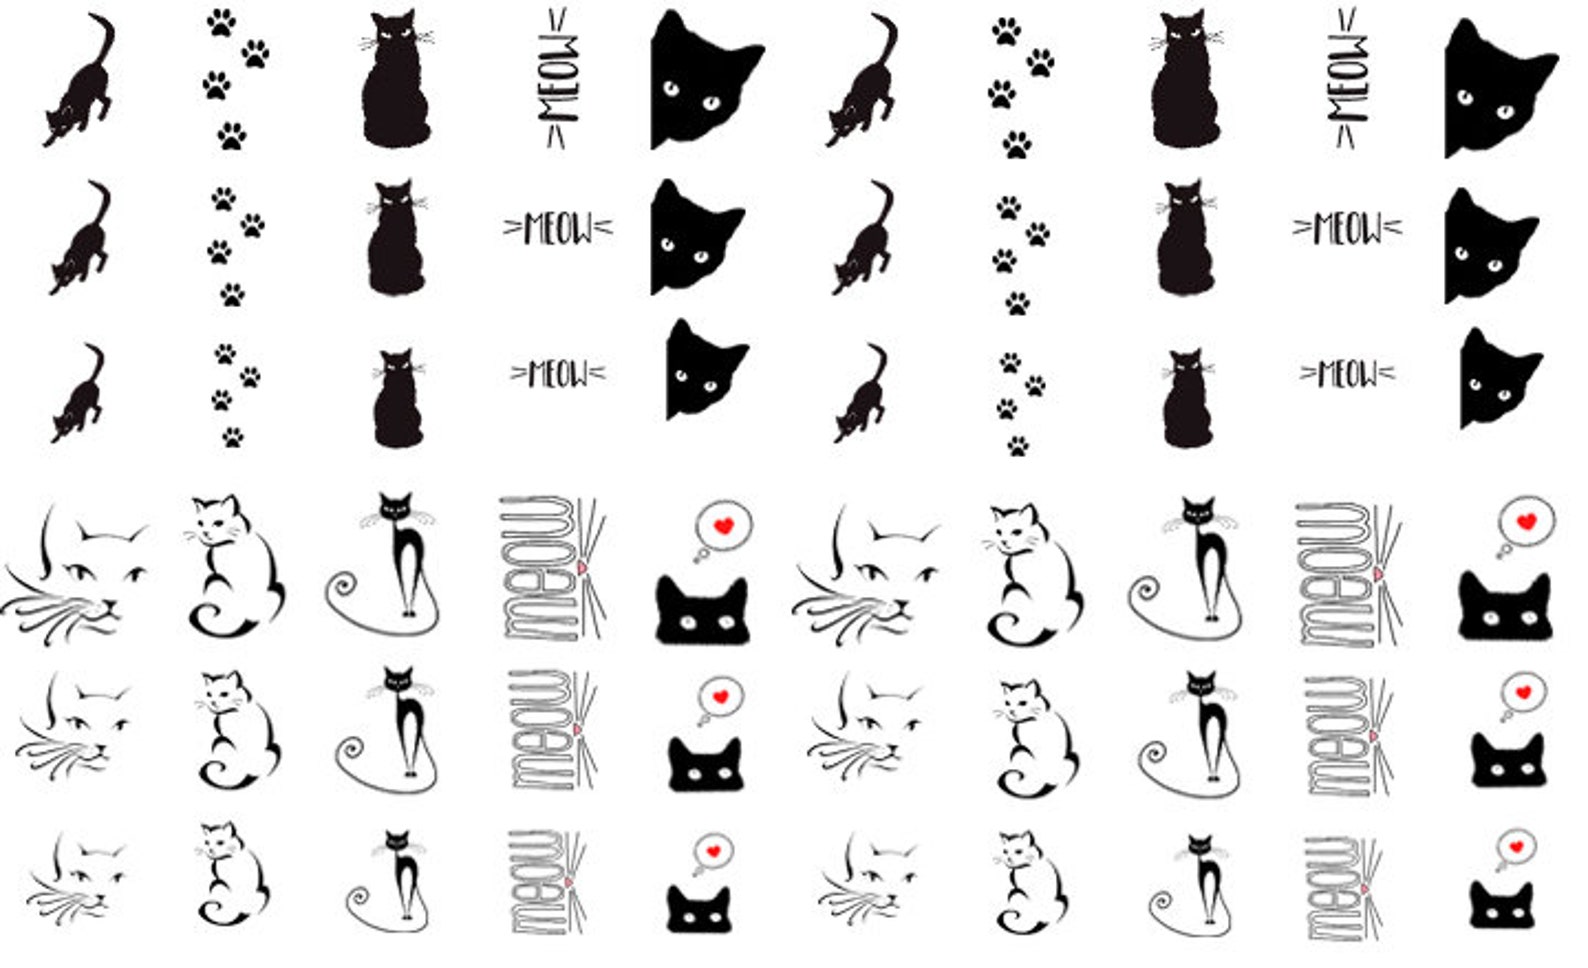 7. "Black Cat Nail Design Tutorial" - wide 4